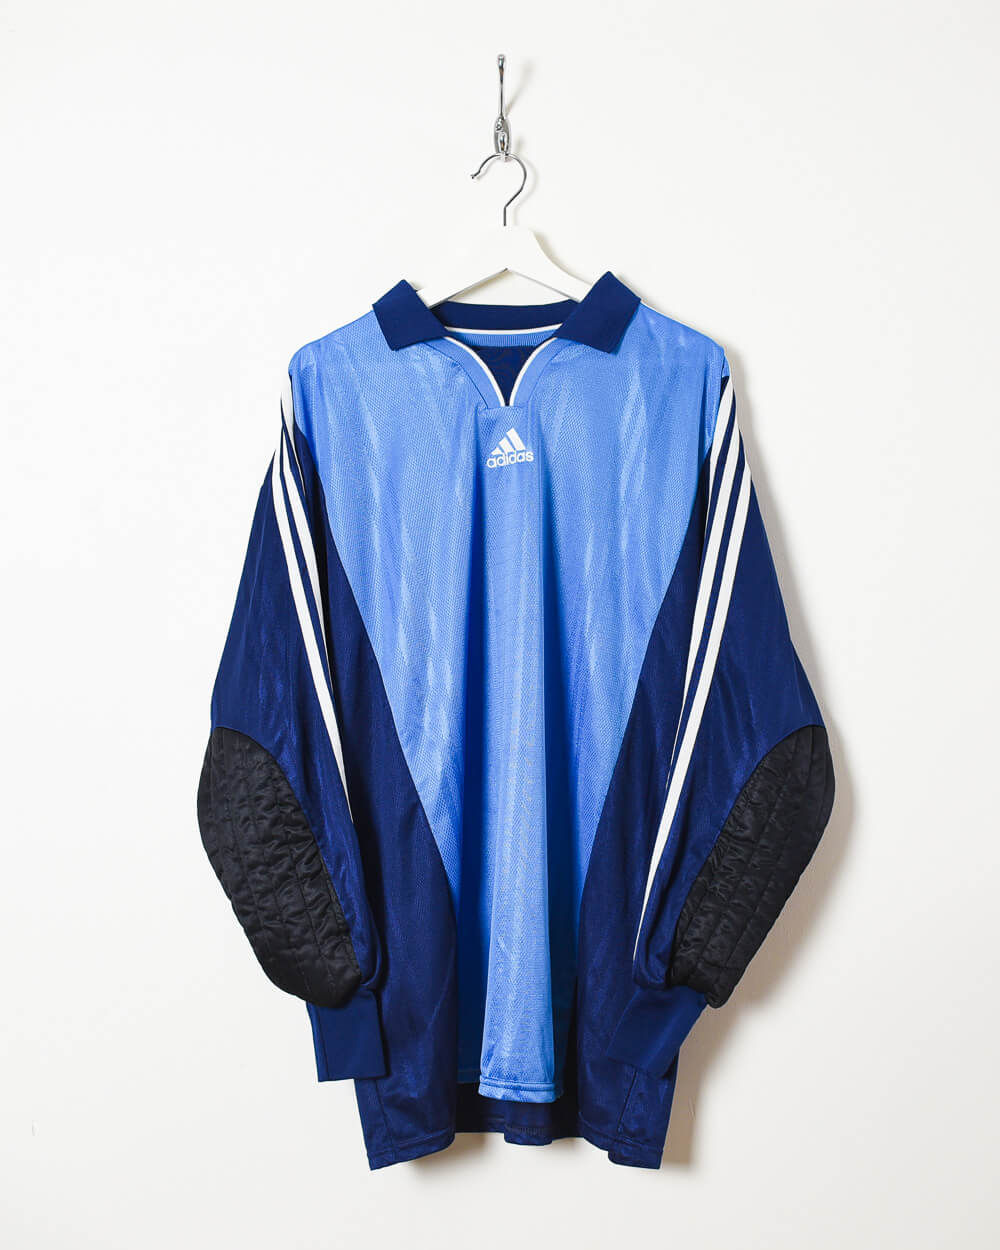 Adidas Football Goalkeepers Shirt - X-Large Vintage